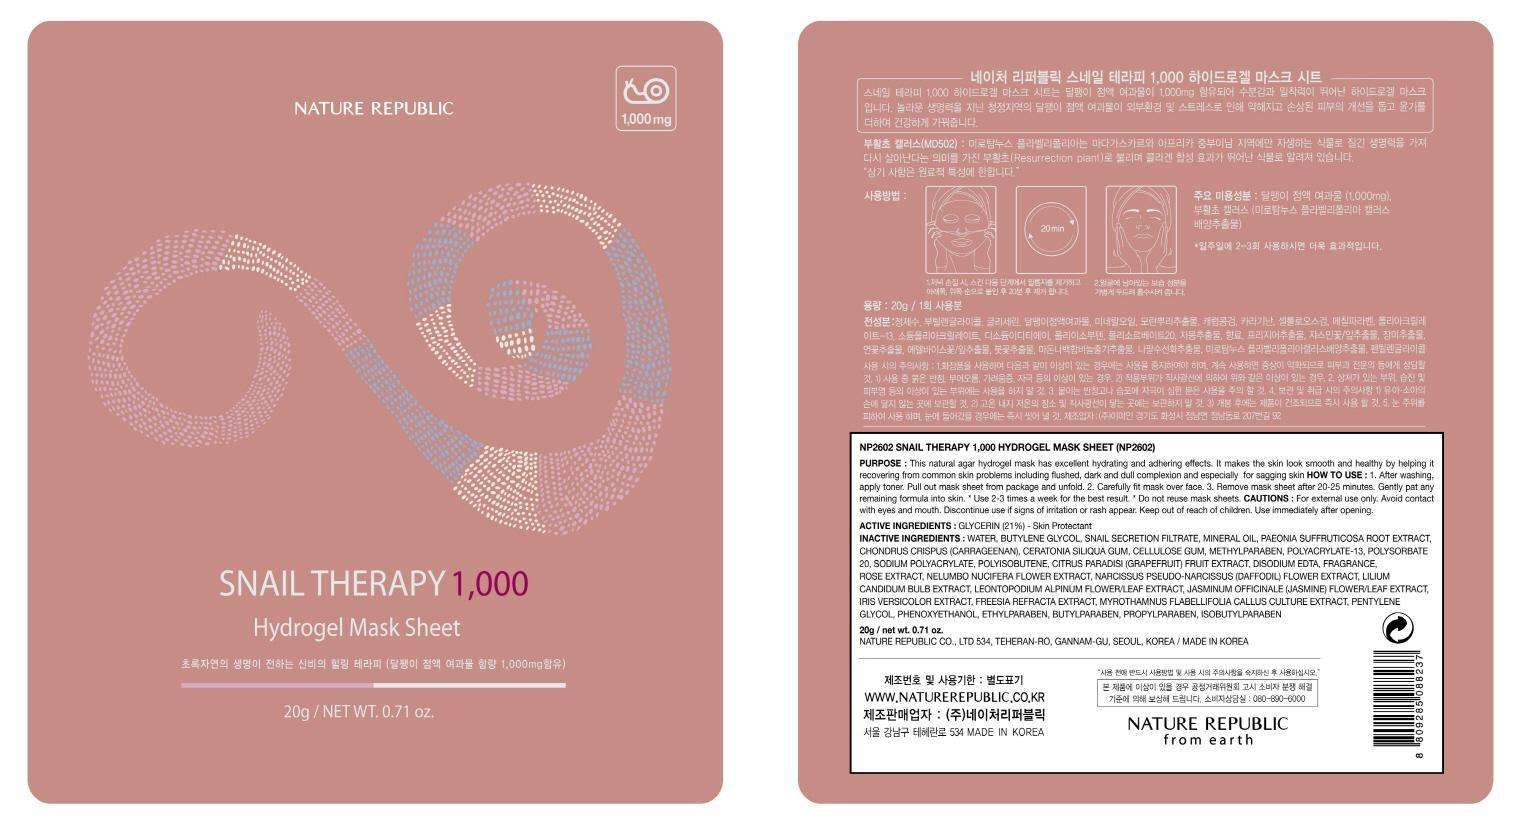 SNAIL THERAPY 1000 HYDROGEL MASK SHEET